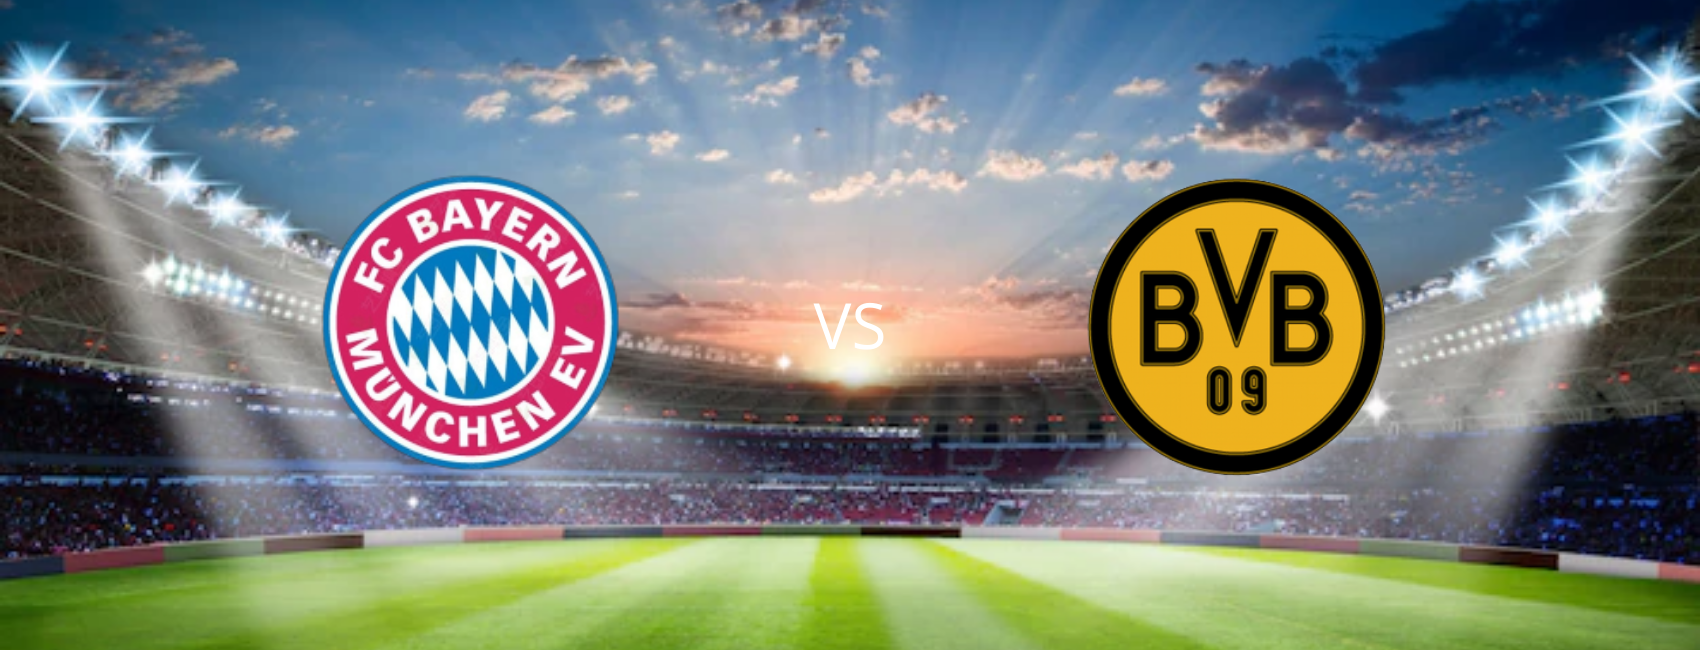 FC Bayern Munich vs Borussia Dortmund Bundesliga Tickets jetzt im Verkauf Ticombo